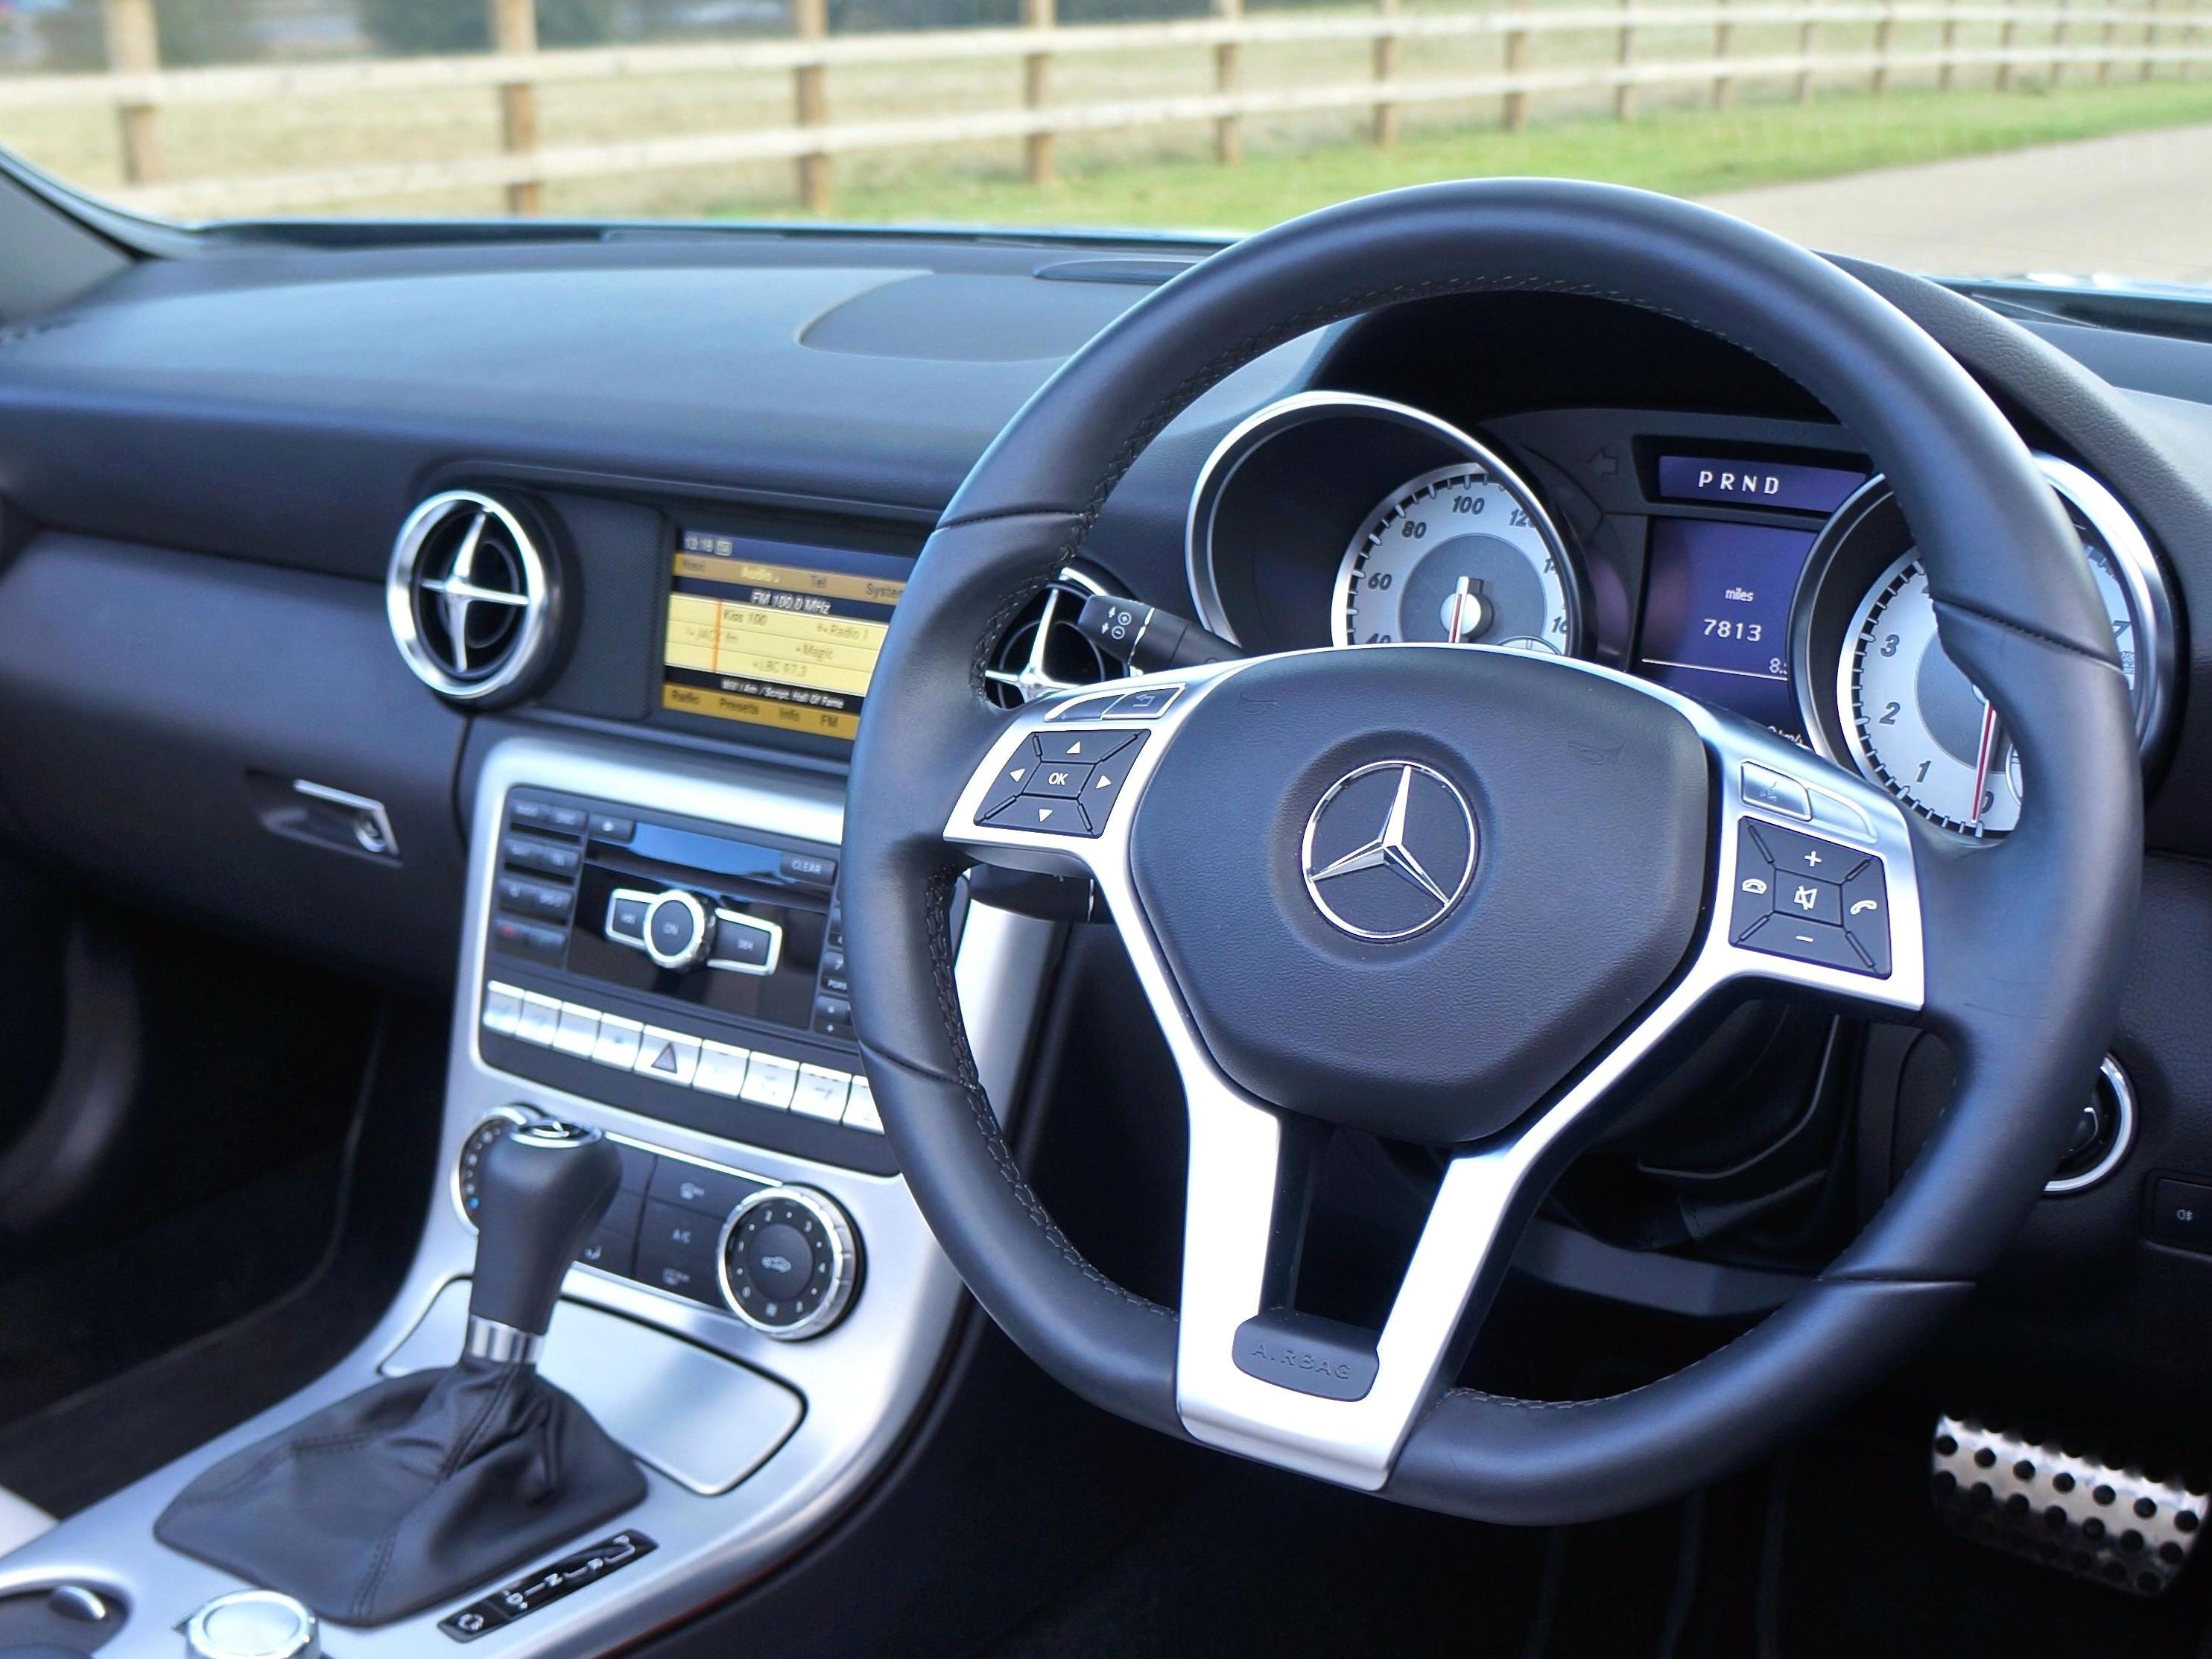 Free picture: car, dashboard, interior, modern, vehicle, speedometer